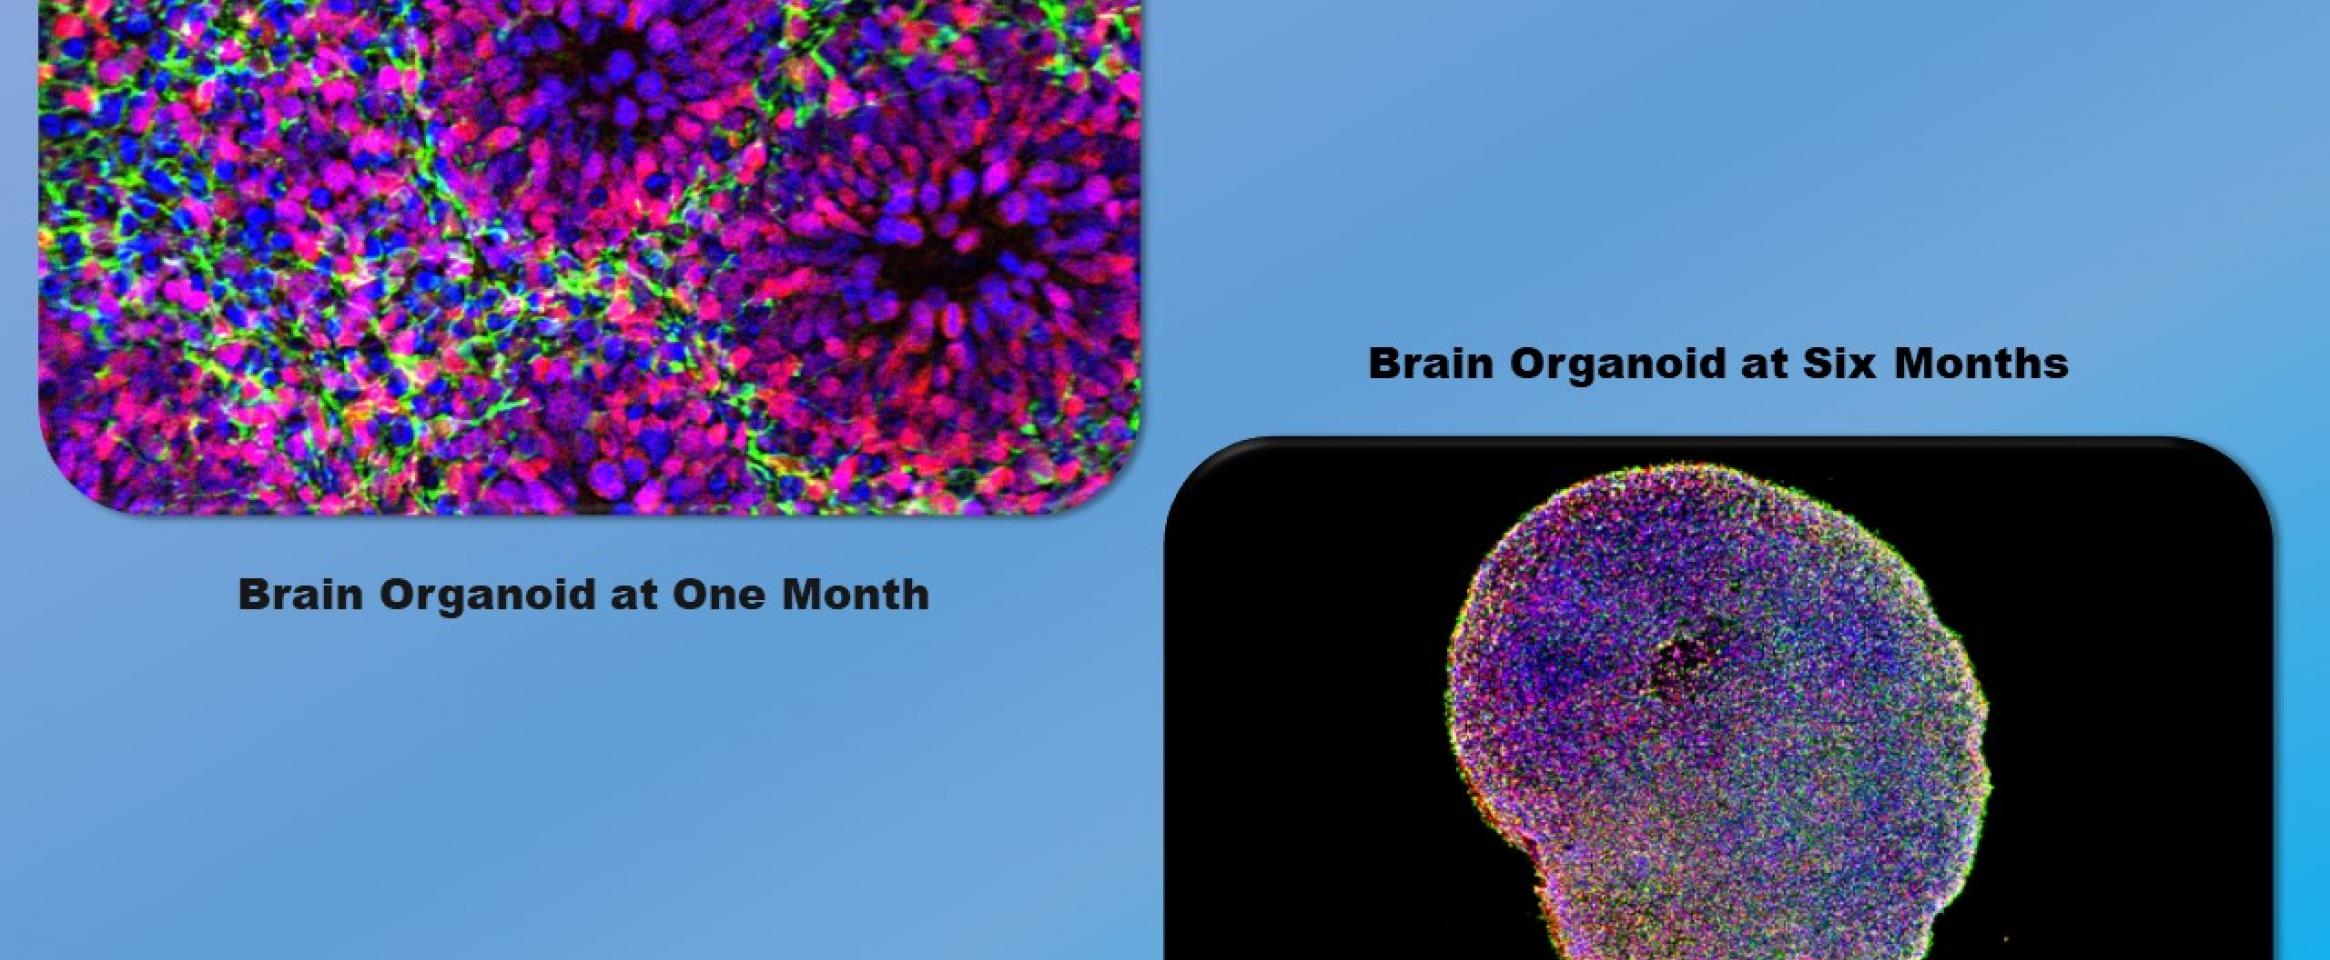 Developing brain organoid